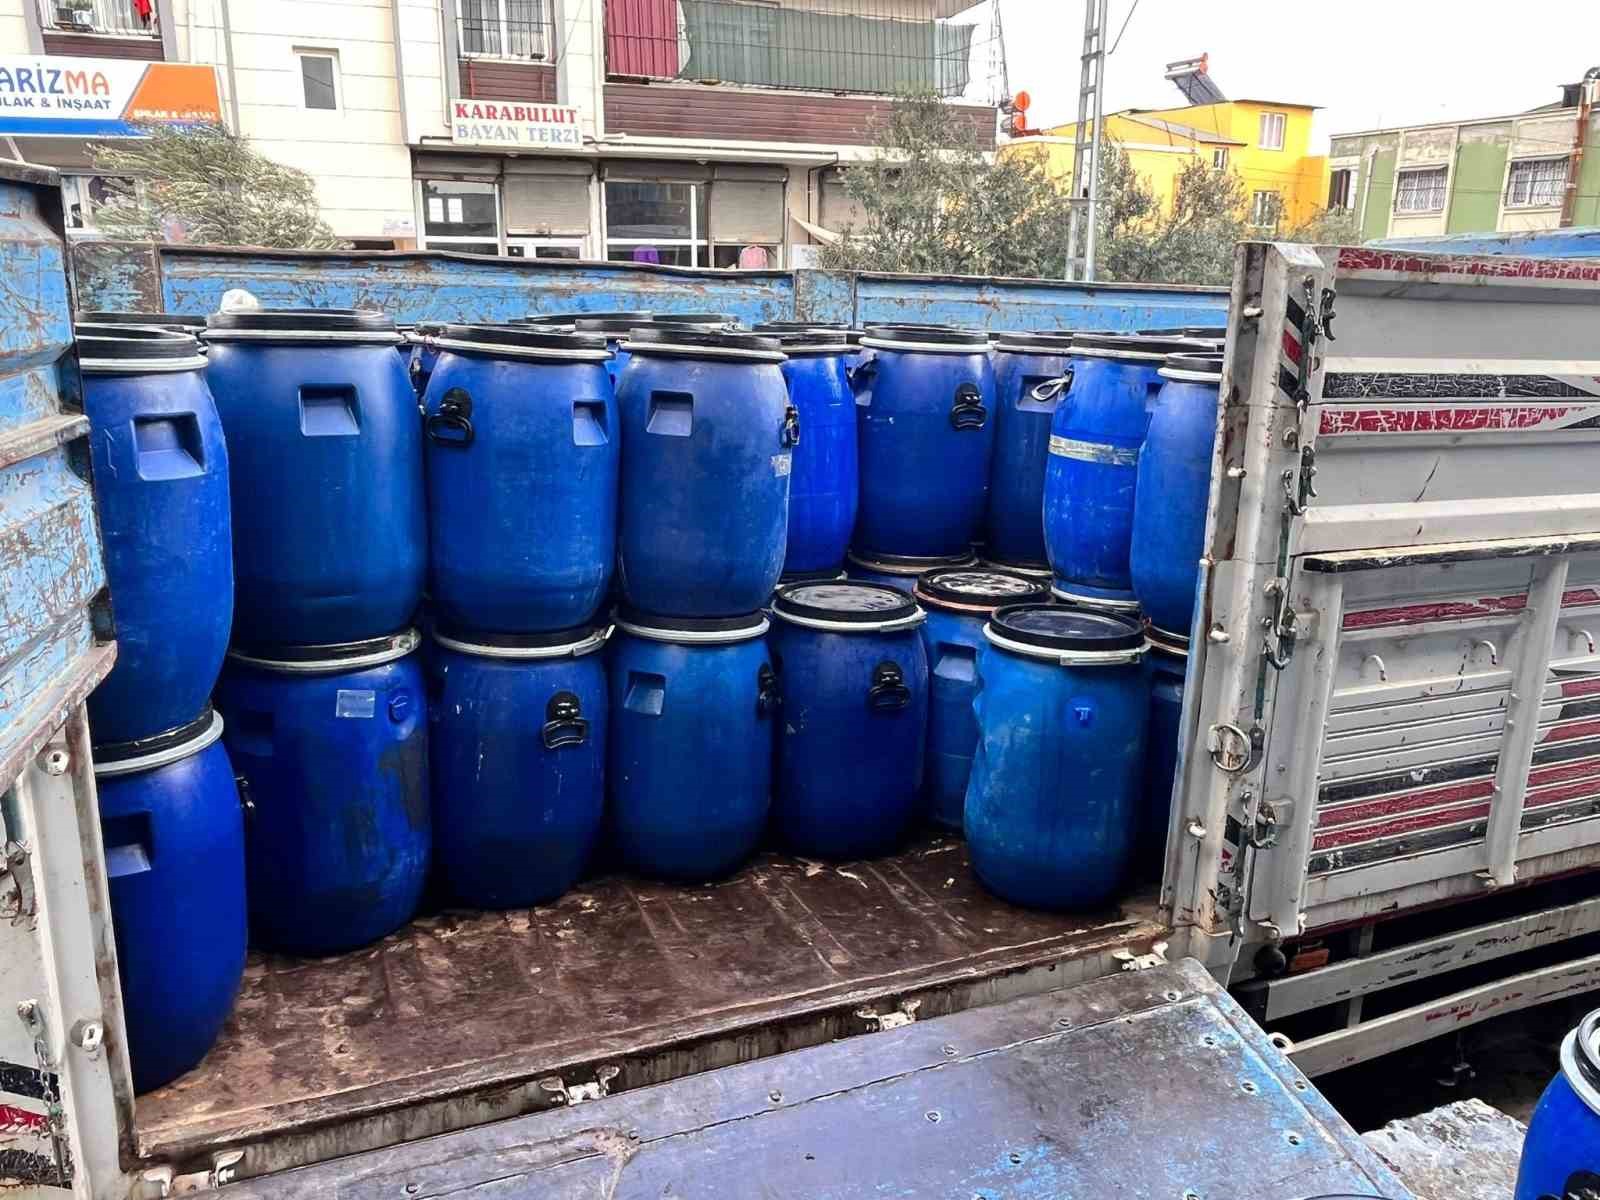 Adana’da 14 bin 300 litre kaçak akaryakıt ele geçirildi